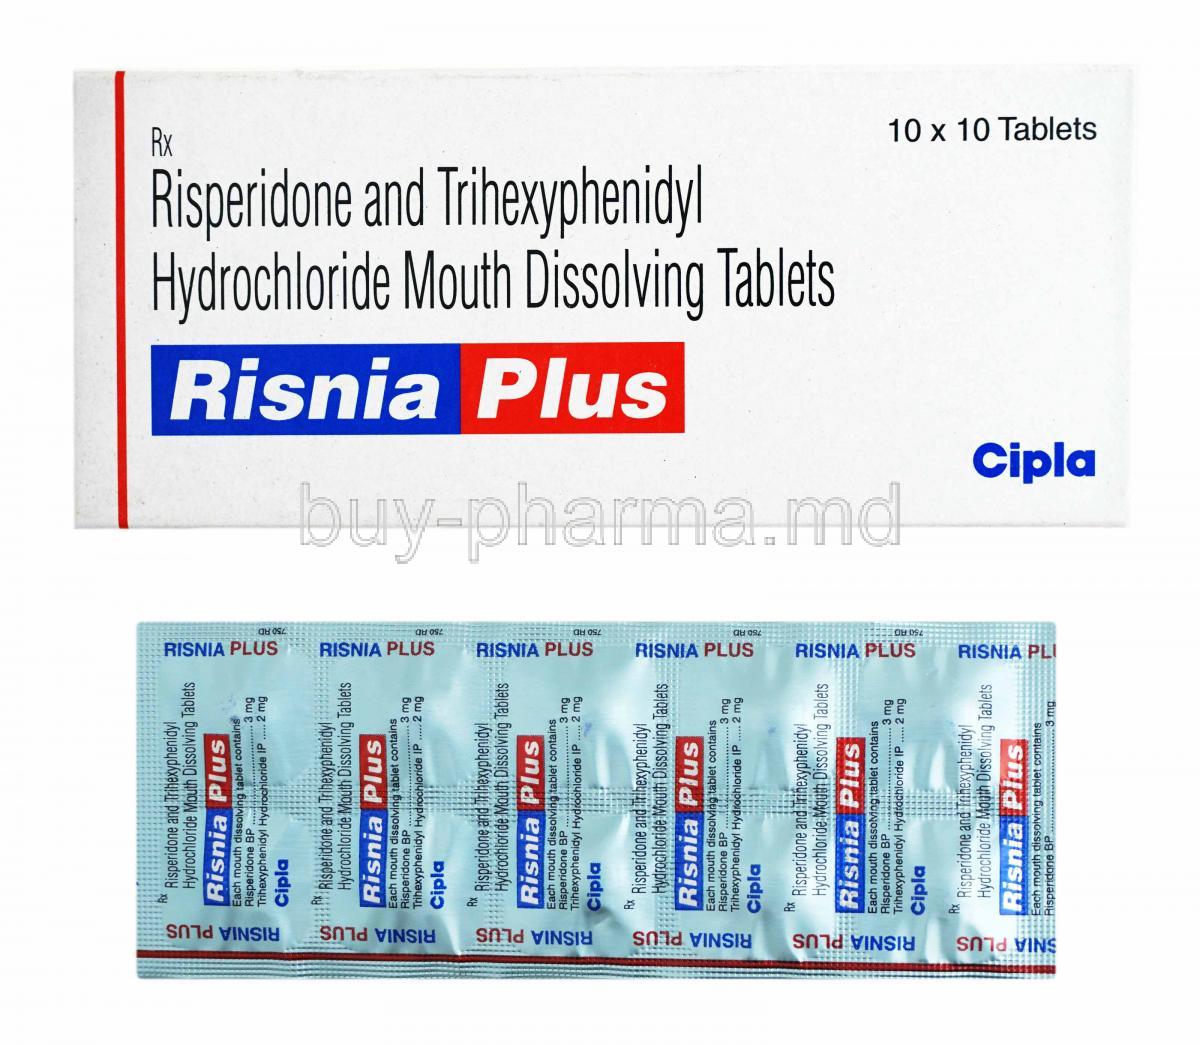 Risnia Plus. Risperidone and Trihexyphenidyl box and tablets